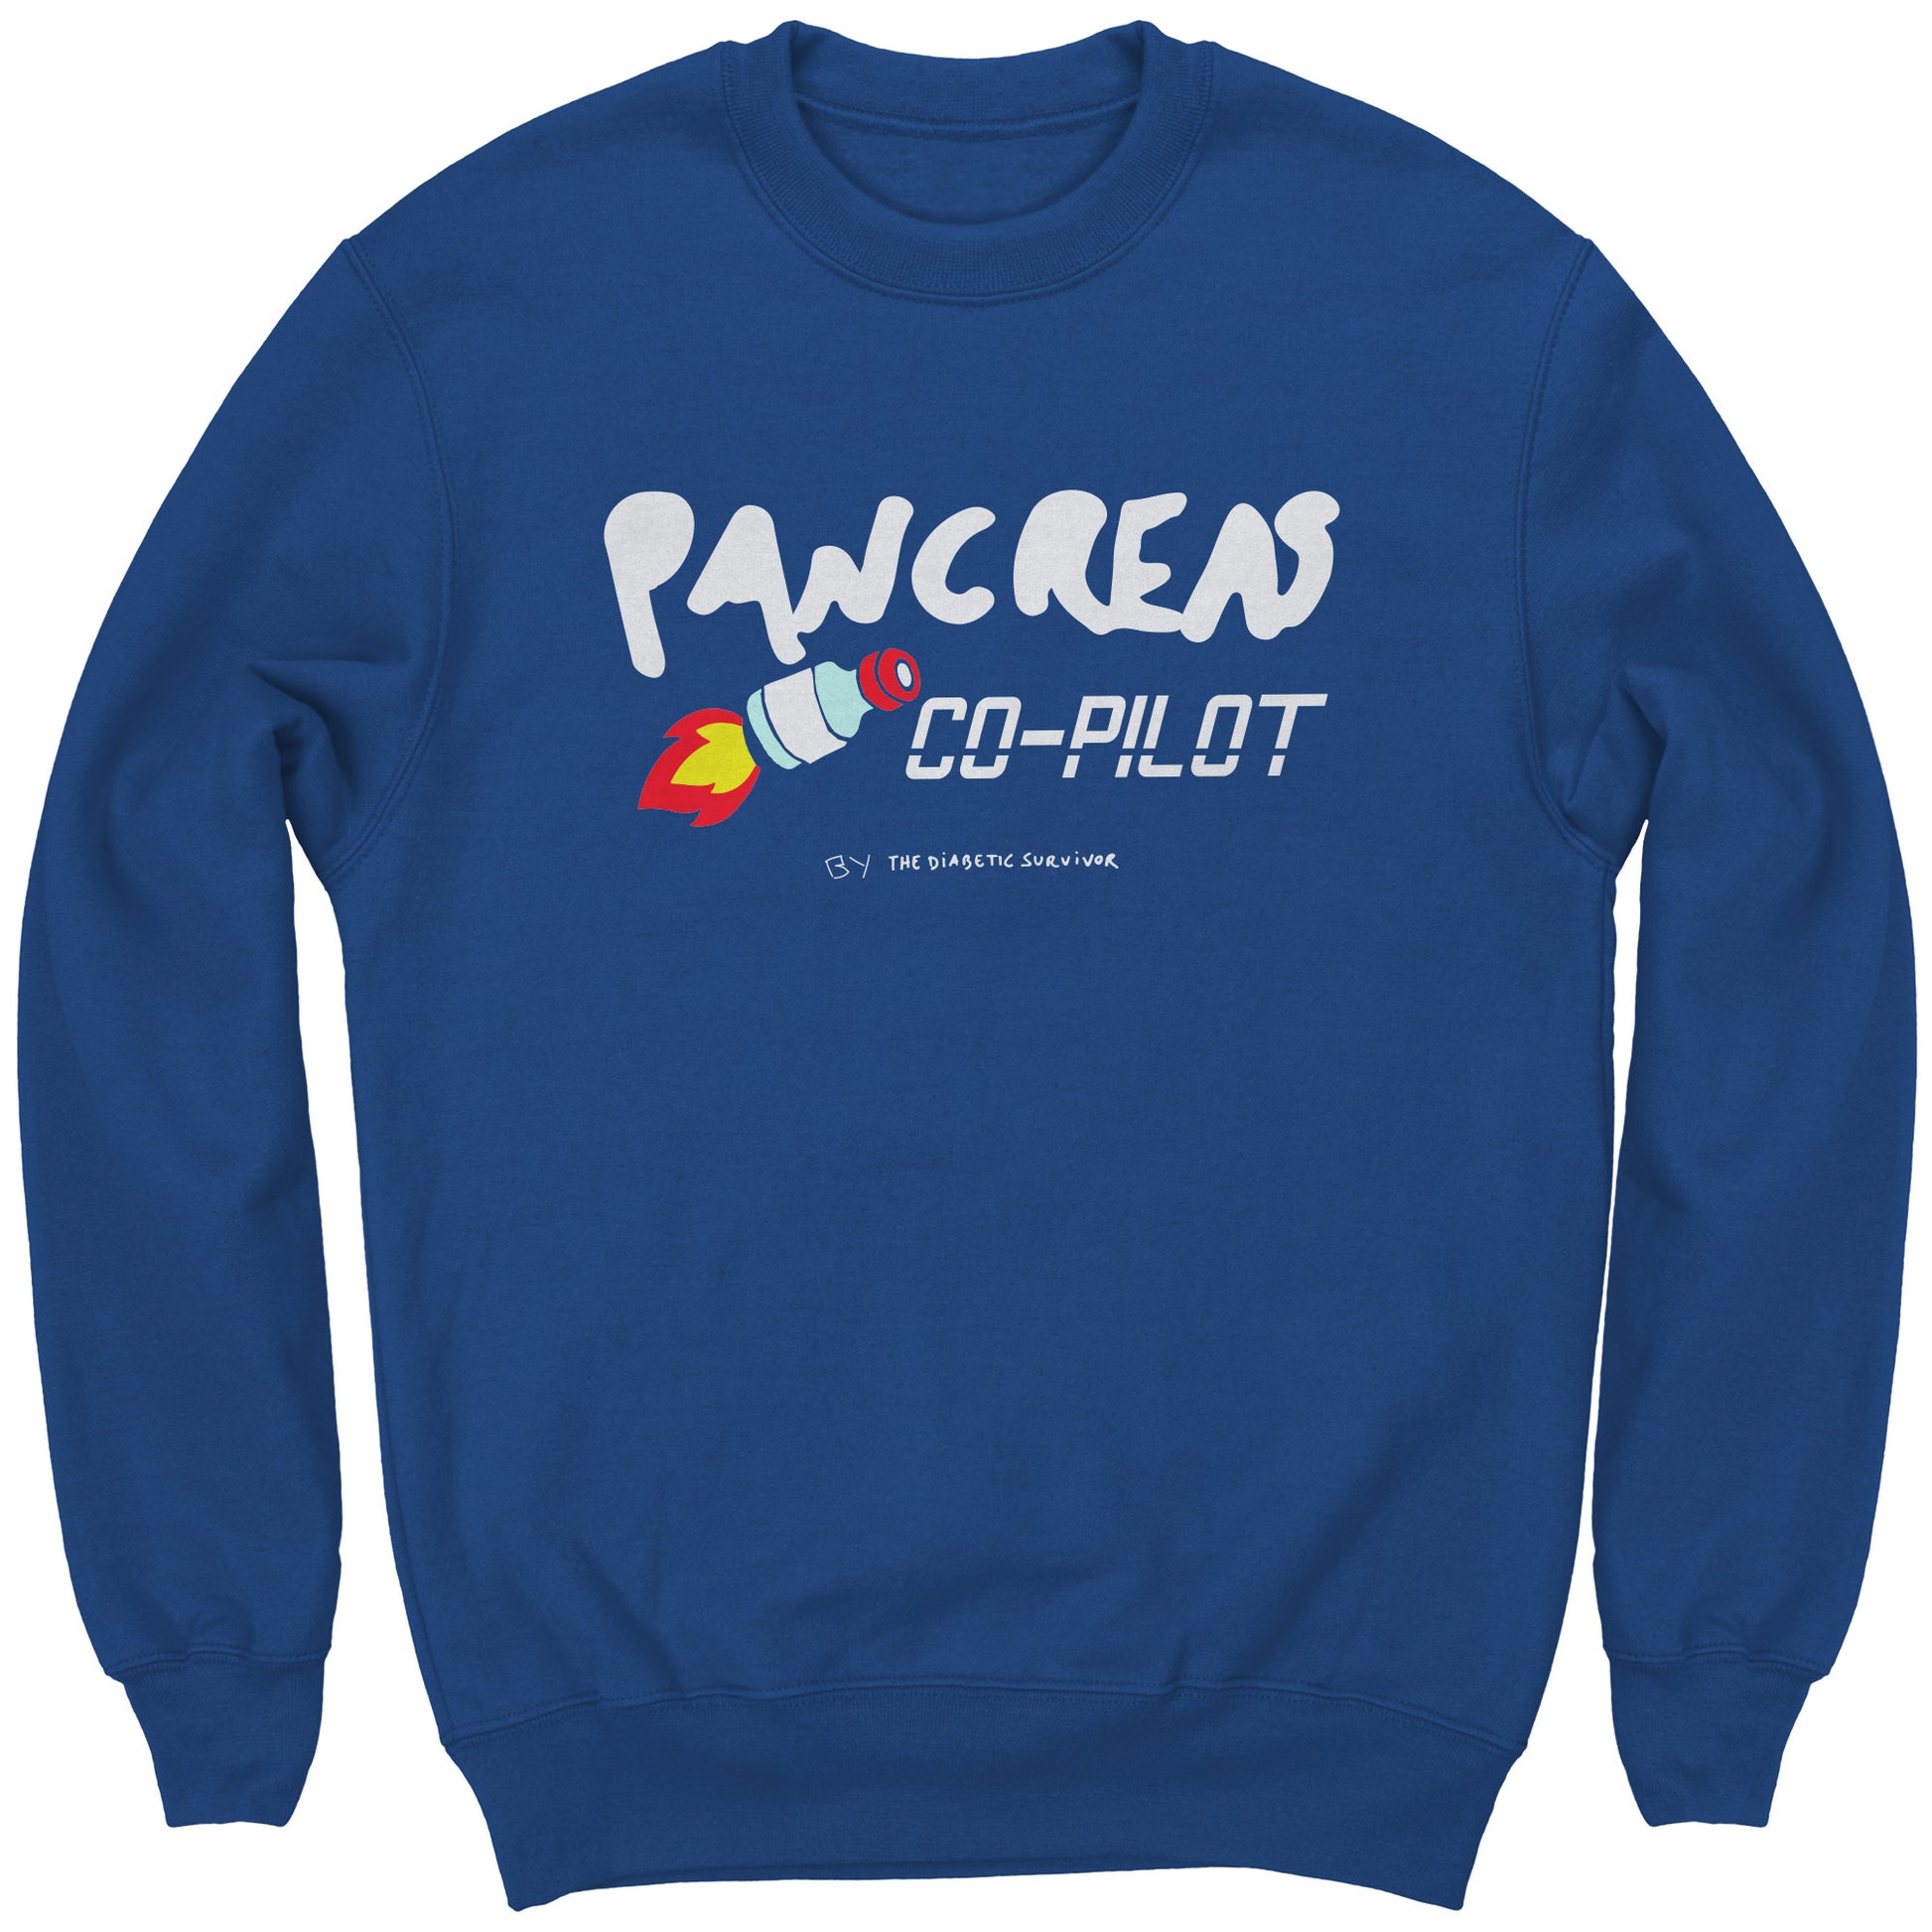 Pancreas CO-PILOT - Sweatshirts